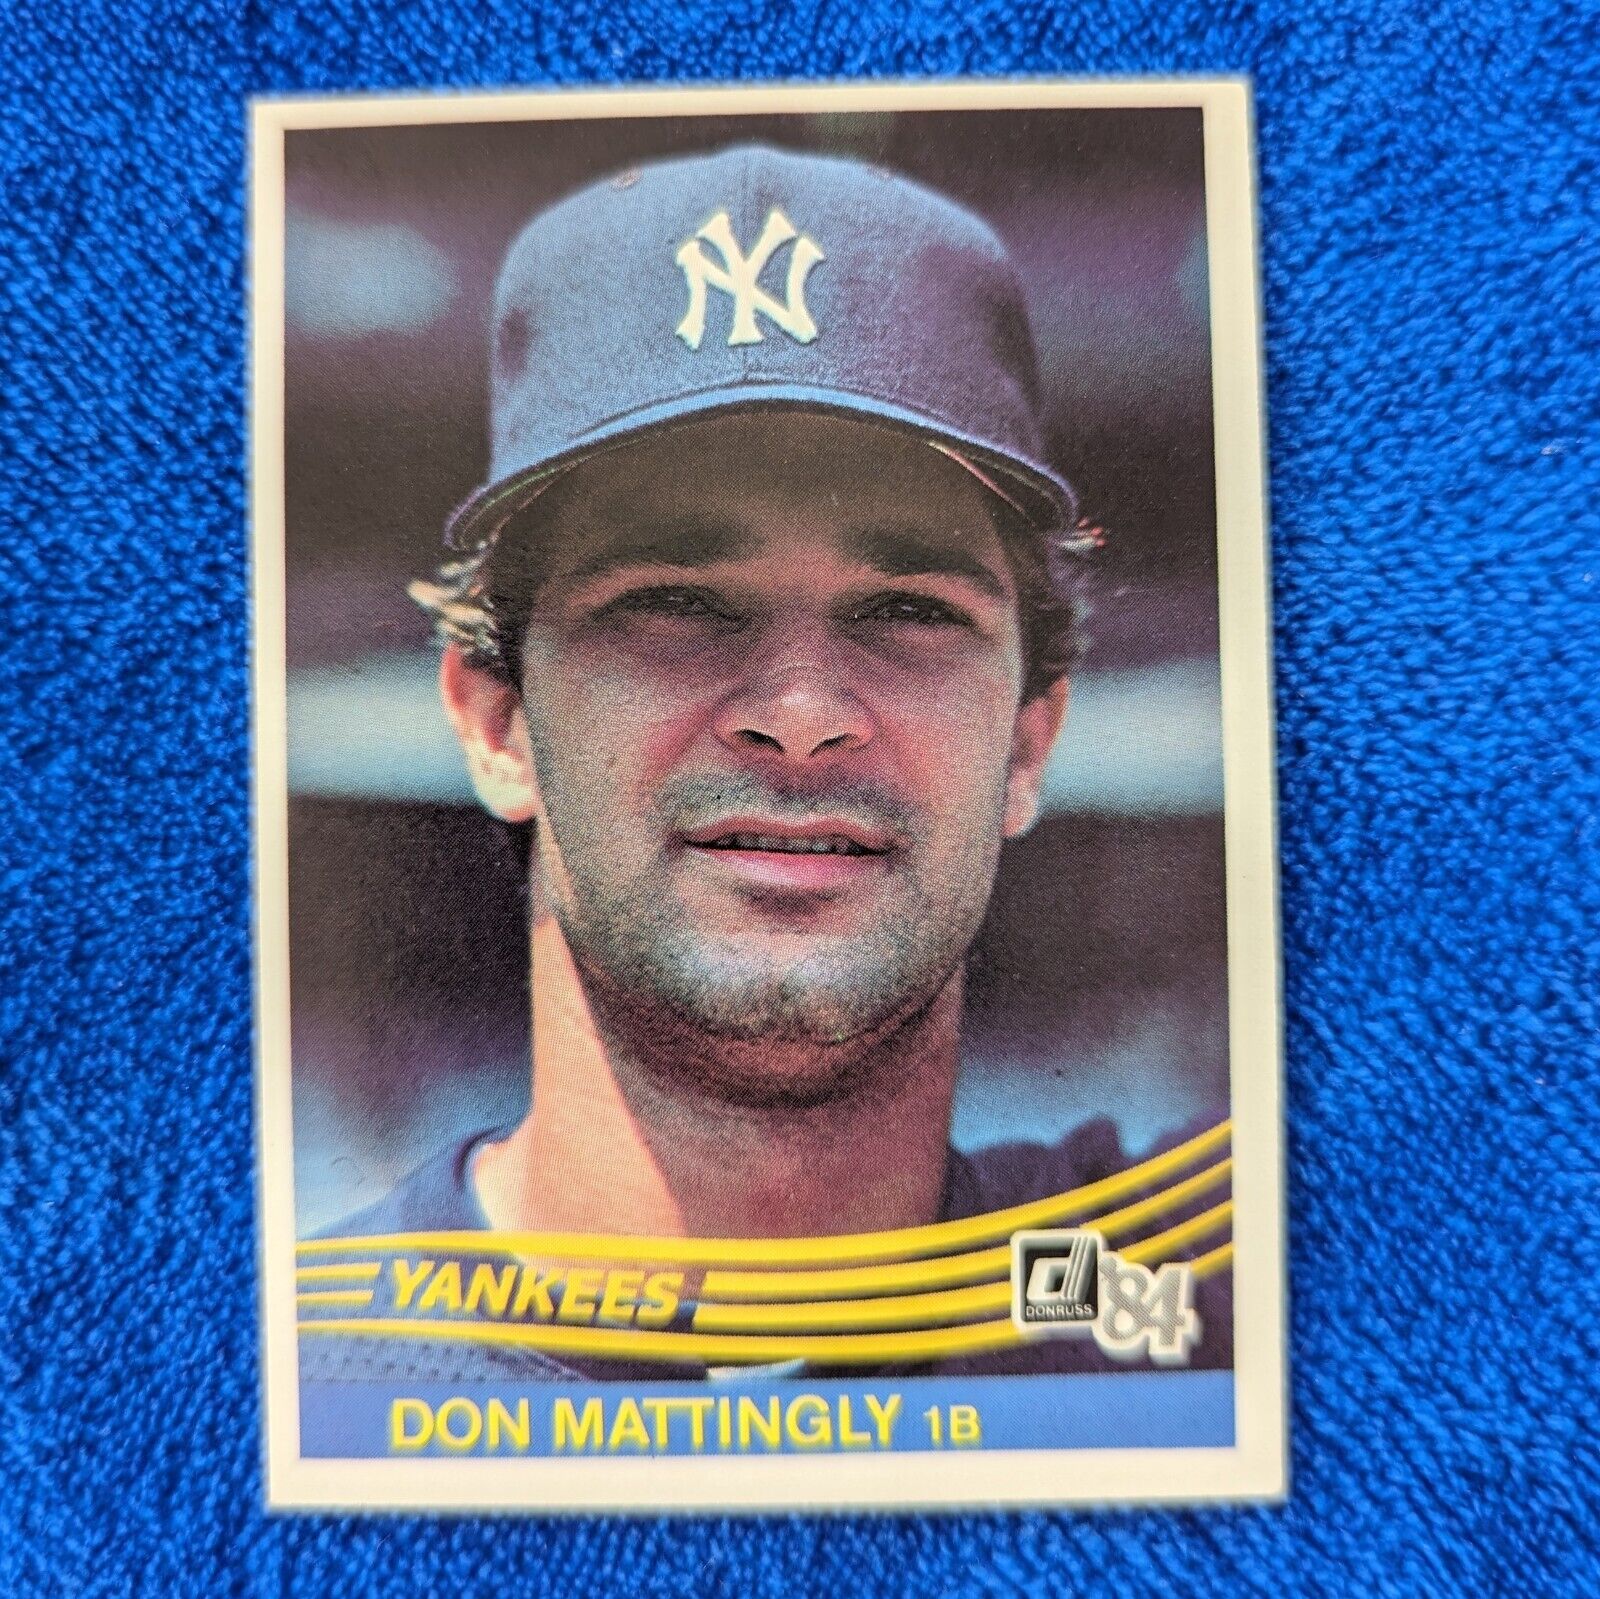 1984 Donruss Don Mattingly rookie card